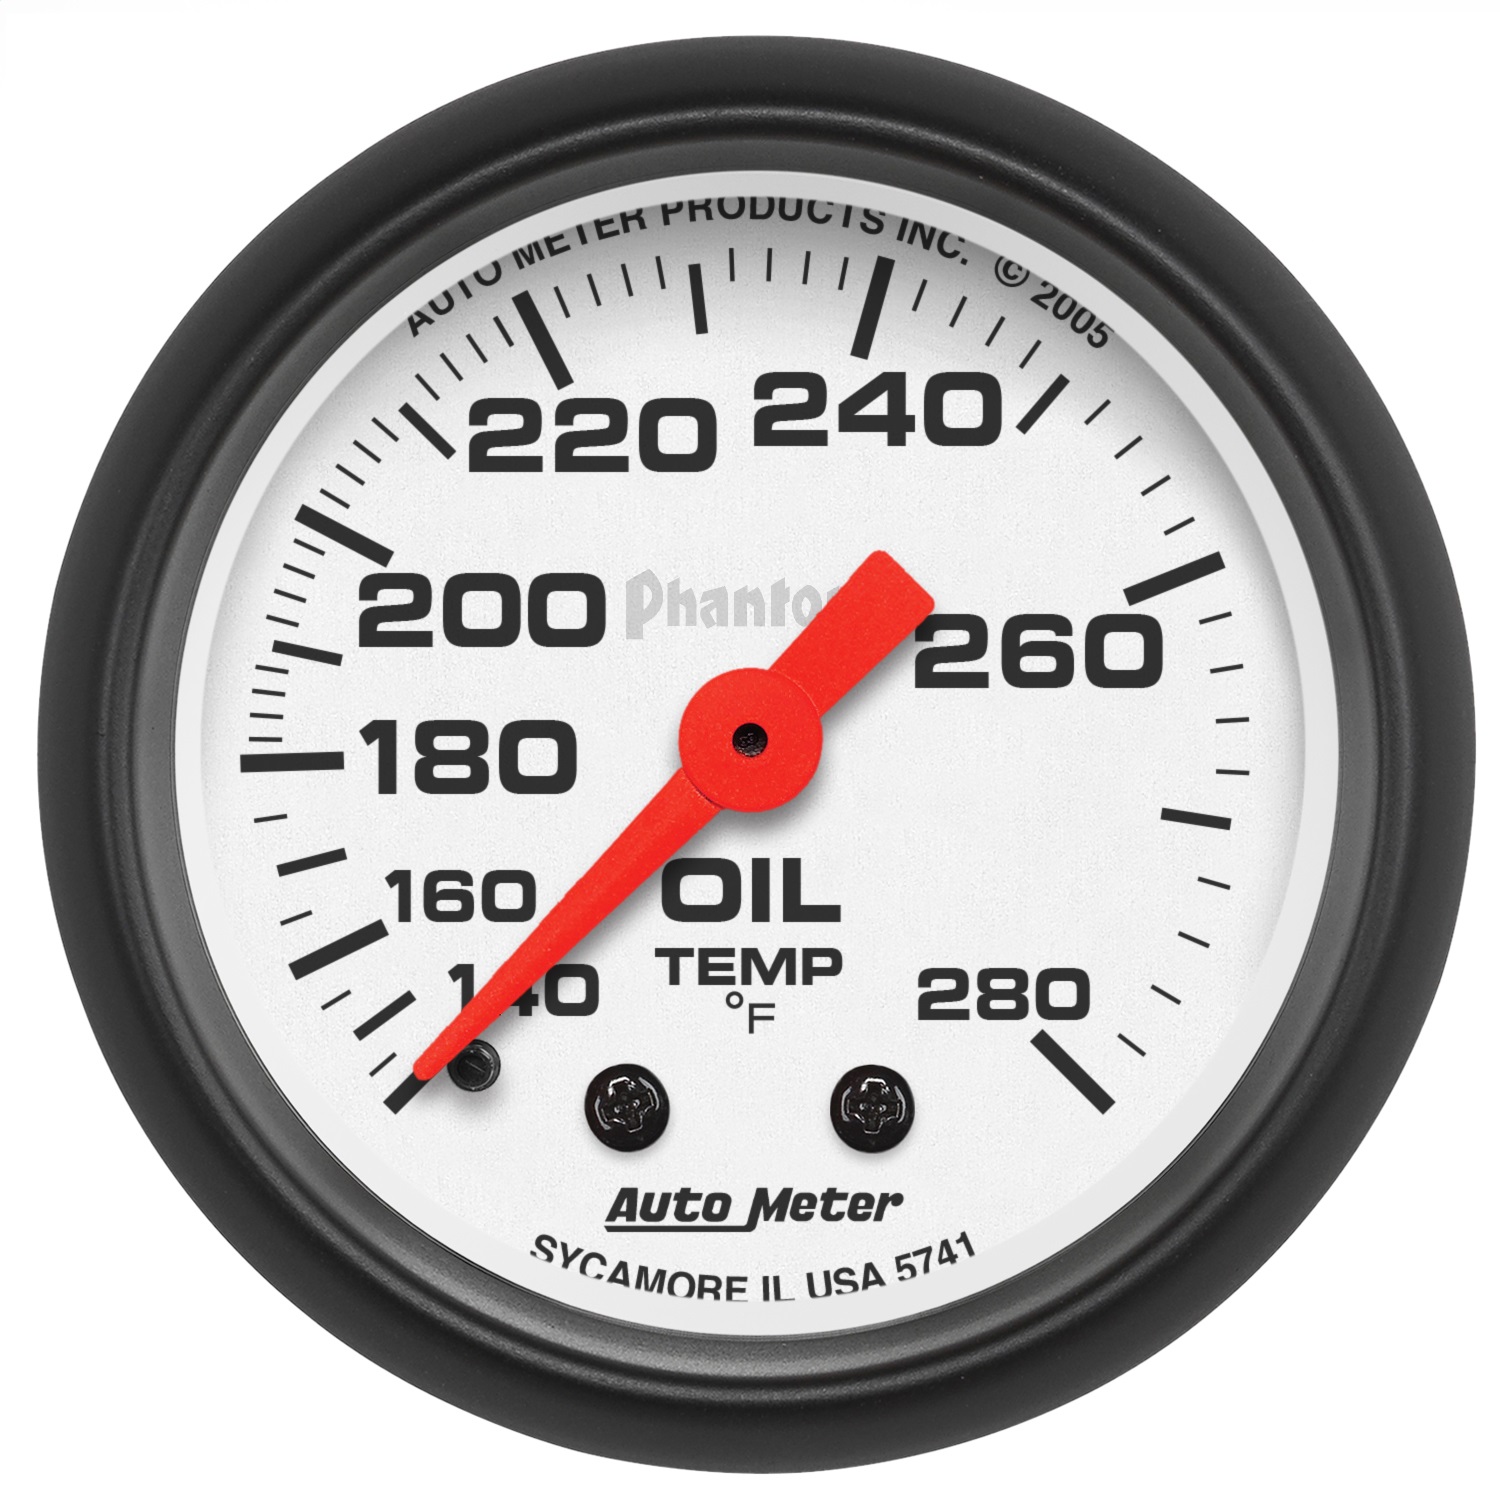 Auto Meter Auto Meter 5741 Phantom; Mechanical Oil Temperature Gauge